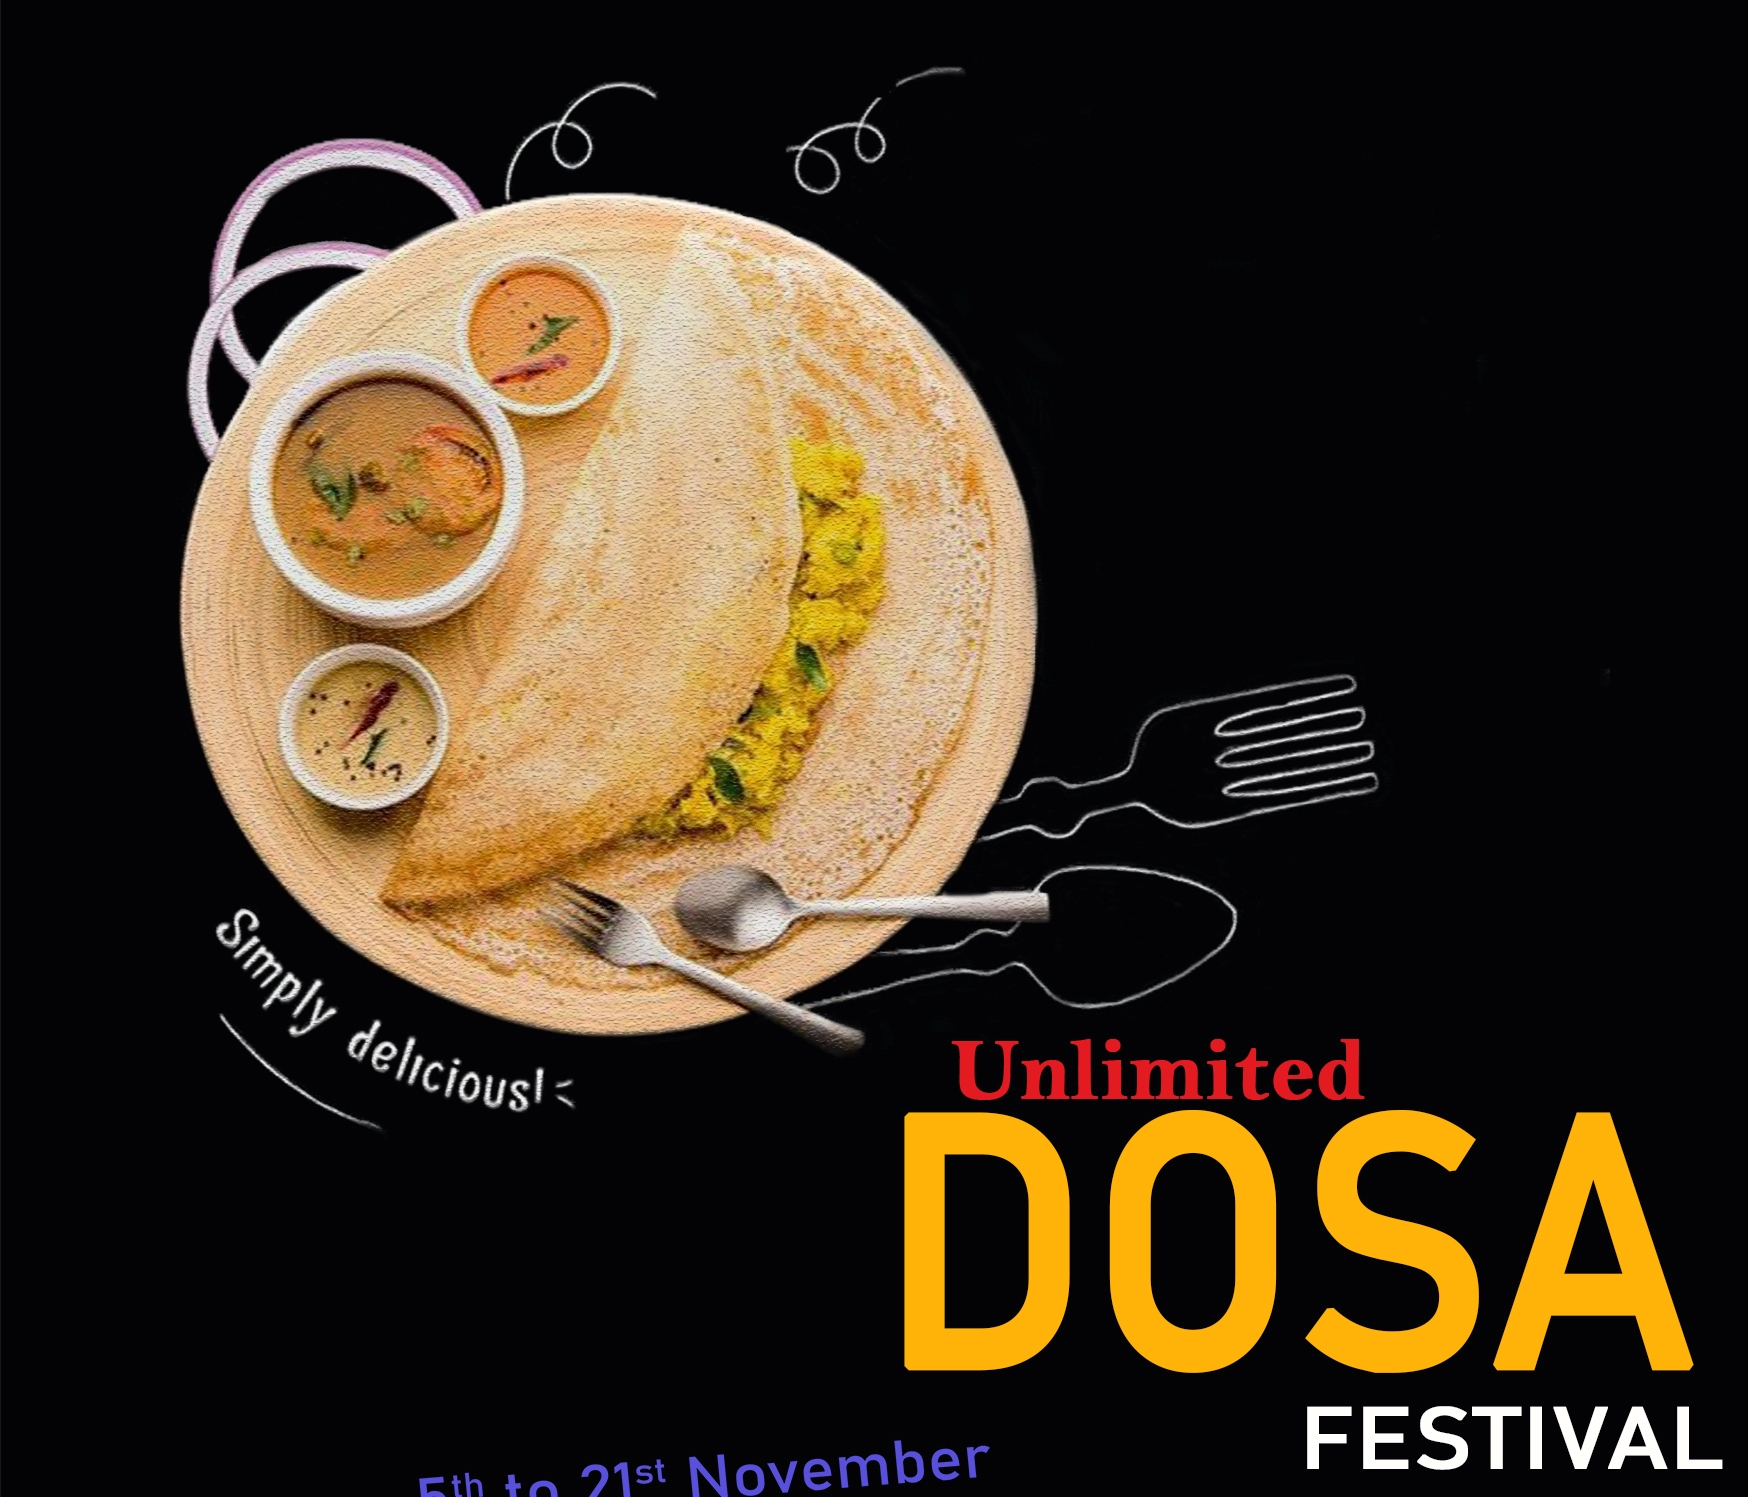 Dosa festival at Shambala Garden Restaurant